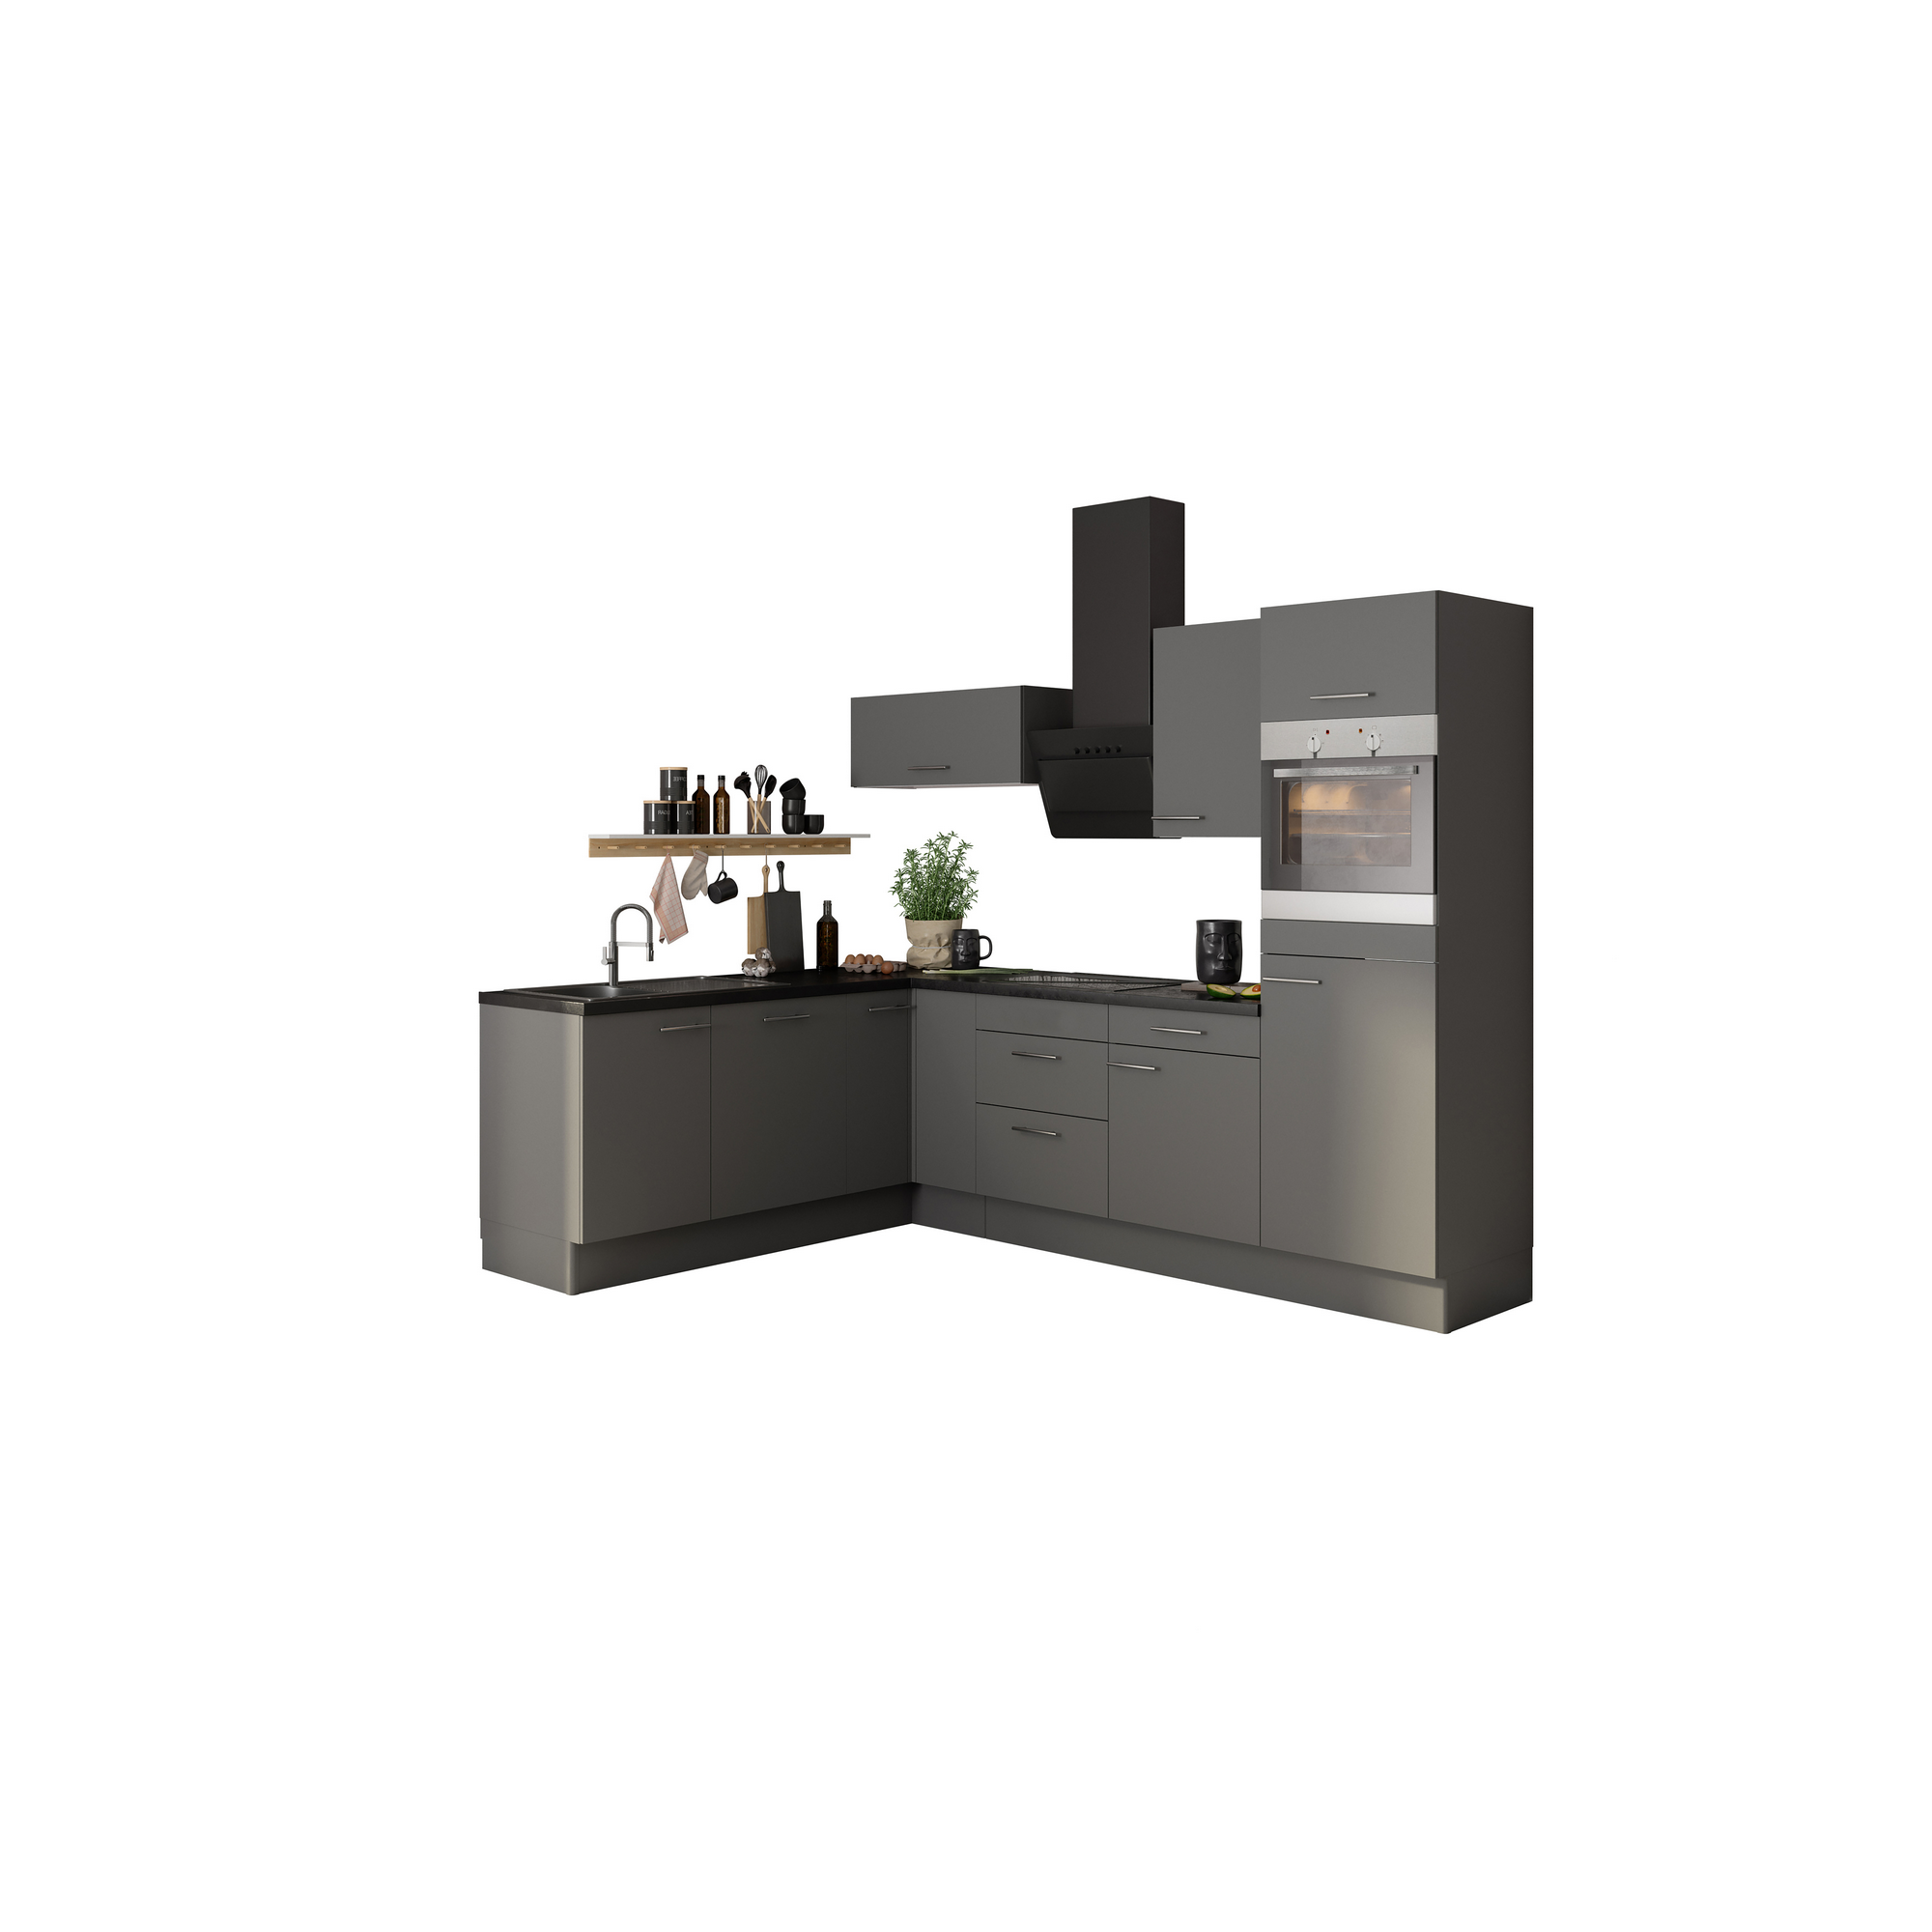 Winkelküche mit E-Geräten 'OPTIkoncept Mats825' grau 270 cm + product picture